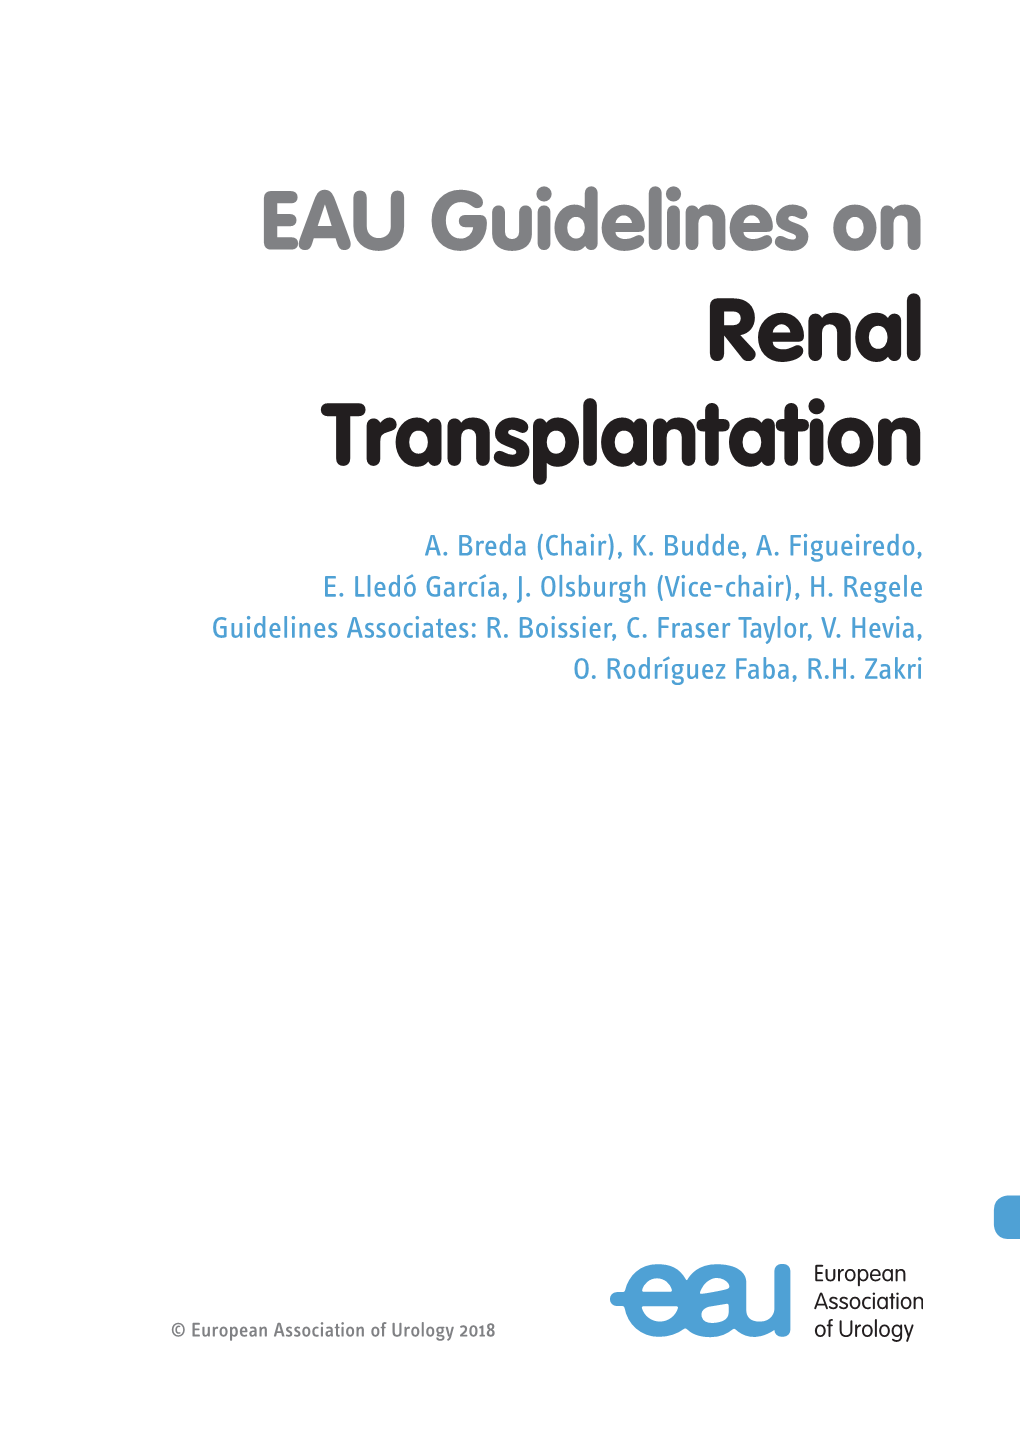 EAU Guidelines on Renal Transplantation 2018